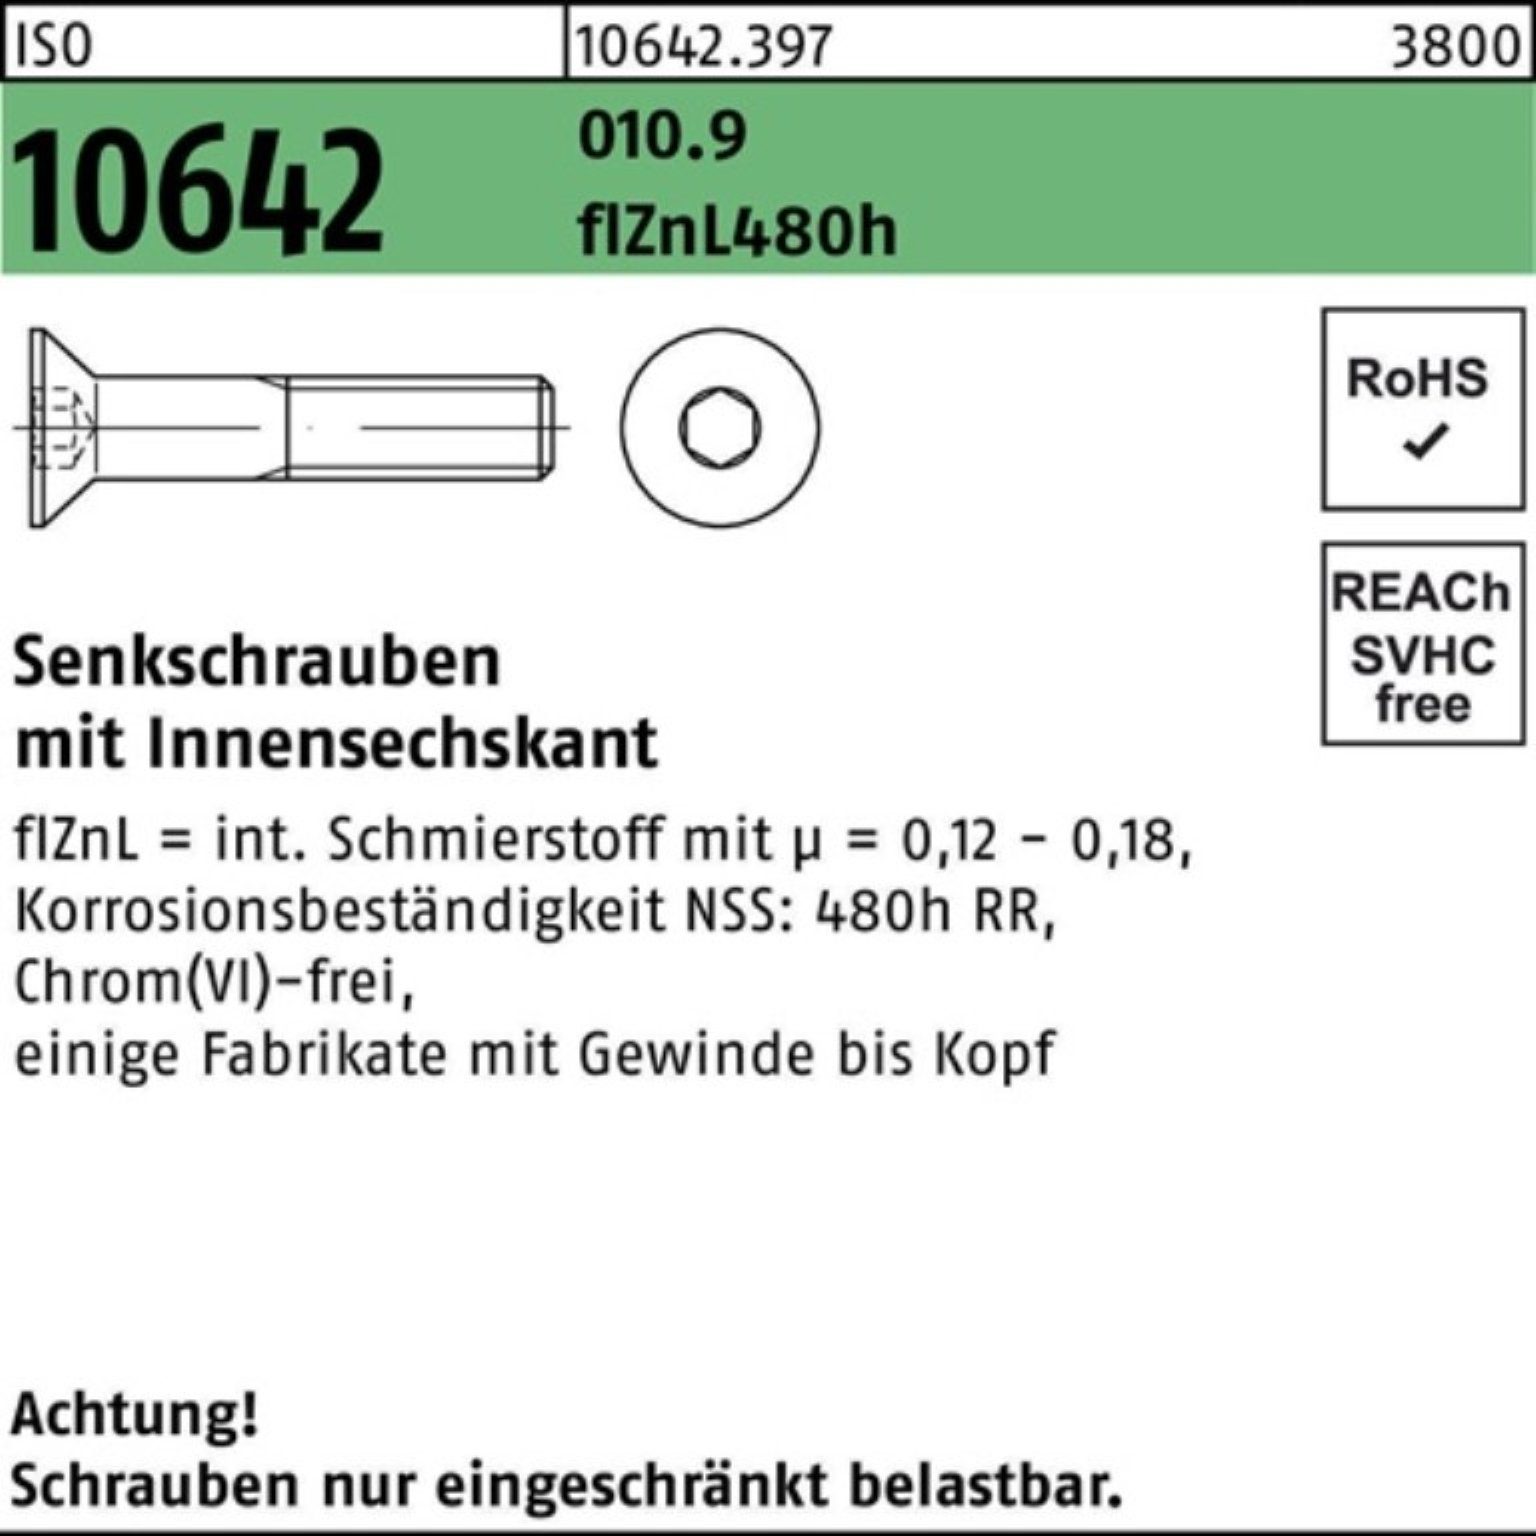 Reyher Senkschraube 200er Pack Senkschraube ISO 10642 Innen-6kt M6x10 010.9 flZnL 480h zin